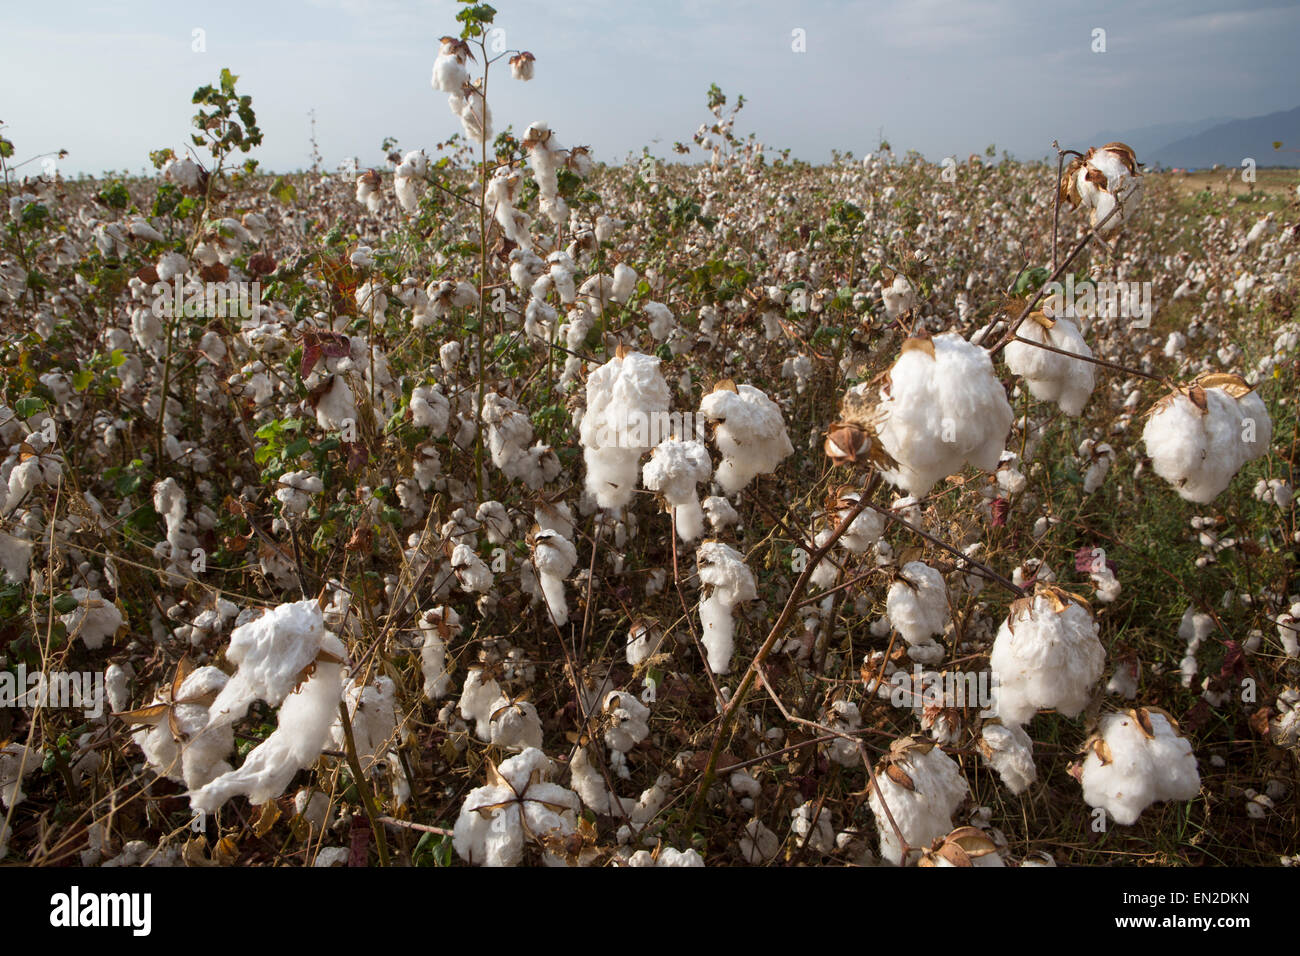 cotton production in Ethiopia Stock Photo